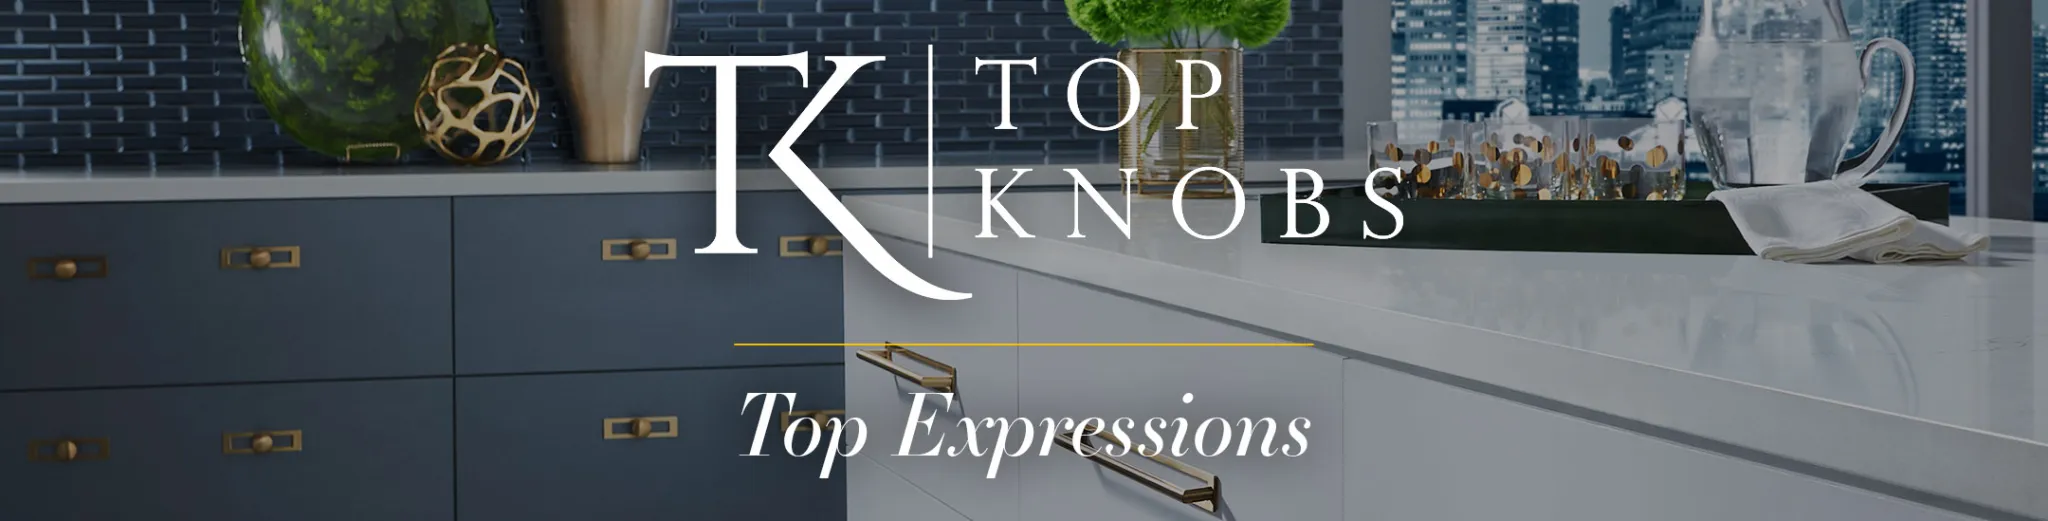 Top-Knobs-Blog-Header-Top-Expressions-2020-1.webp